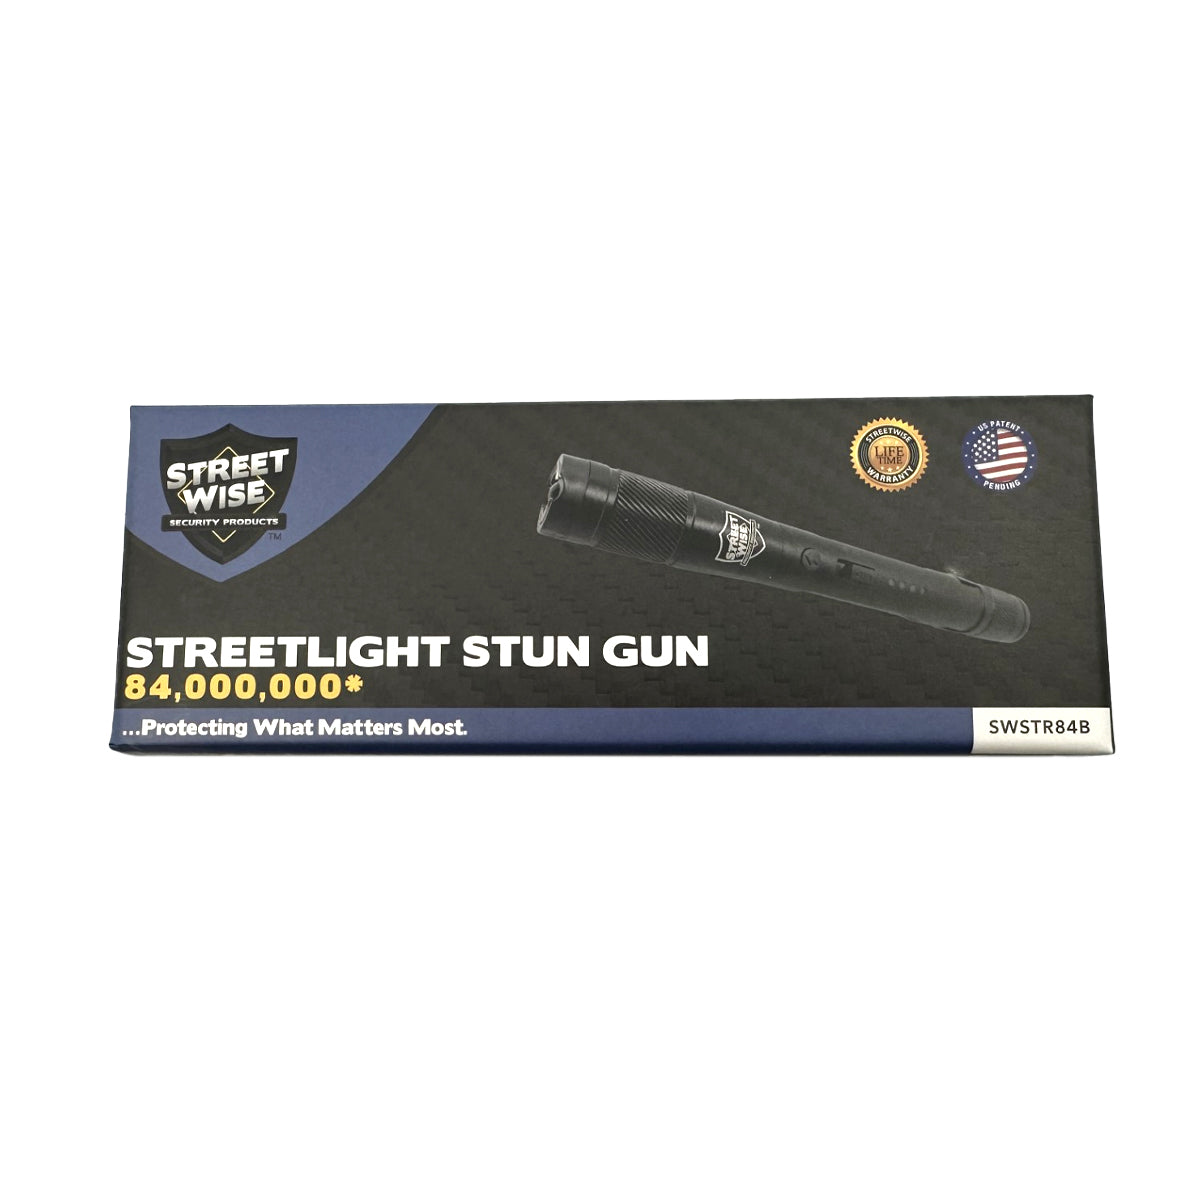 Streetlight Stun Gun 84,000,000